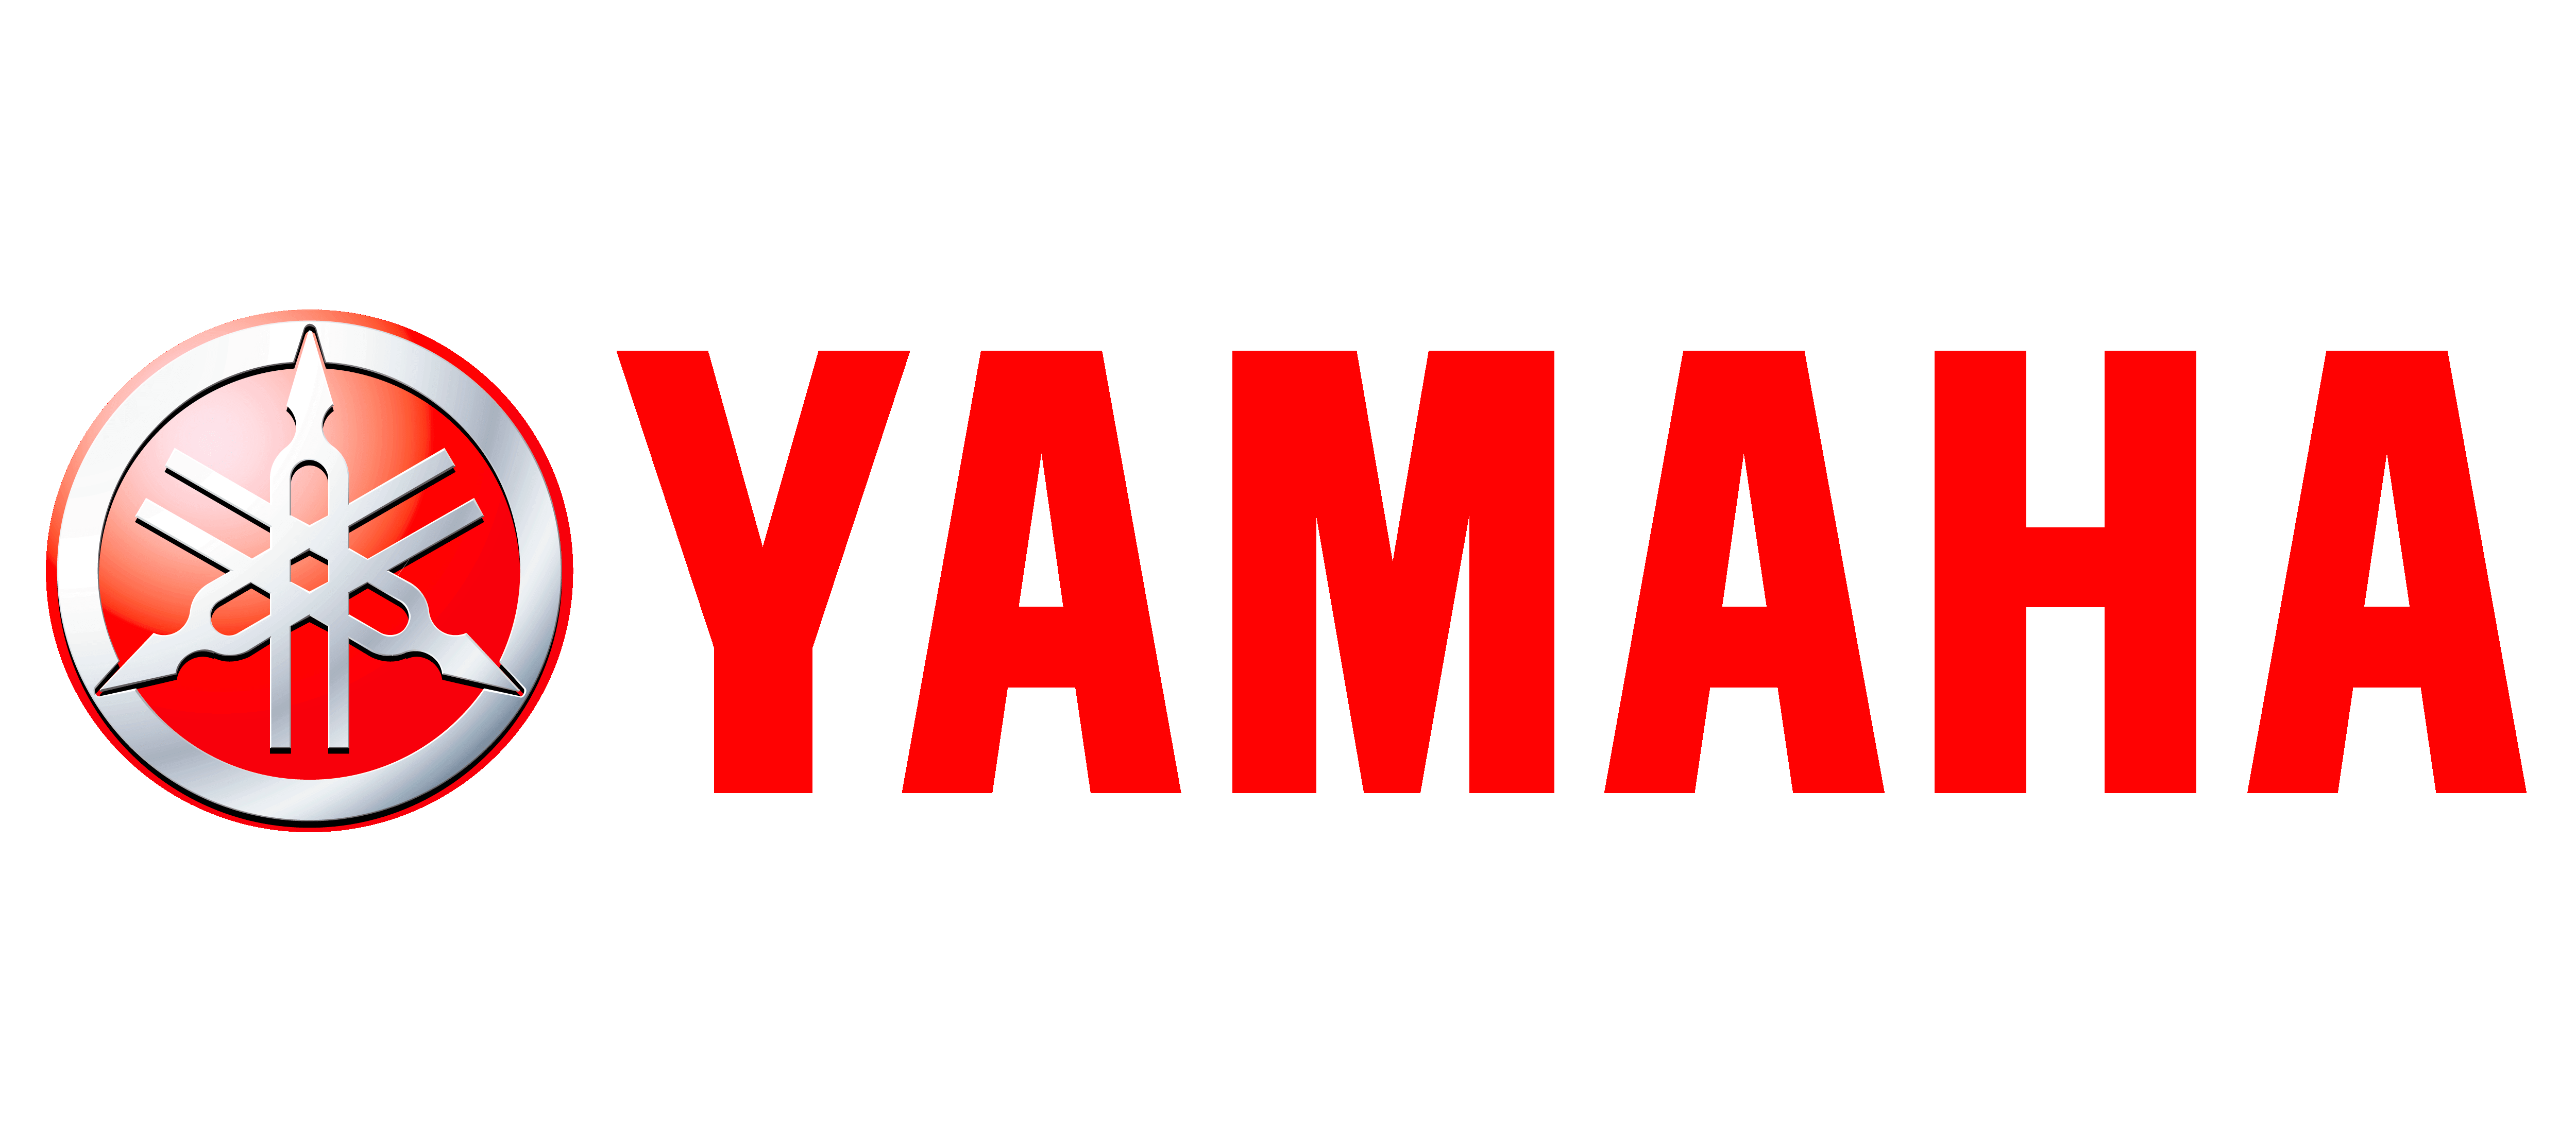 yamaha-logo-motorcycle